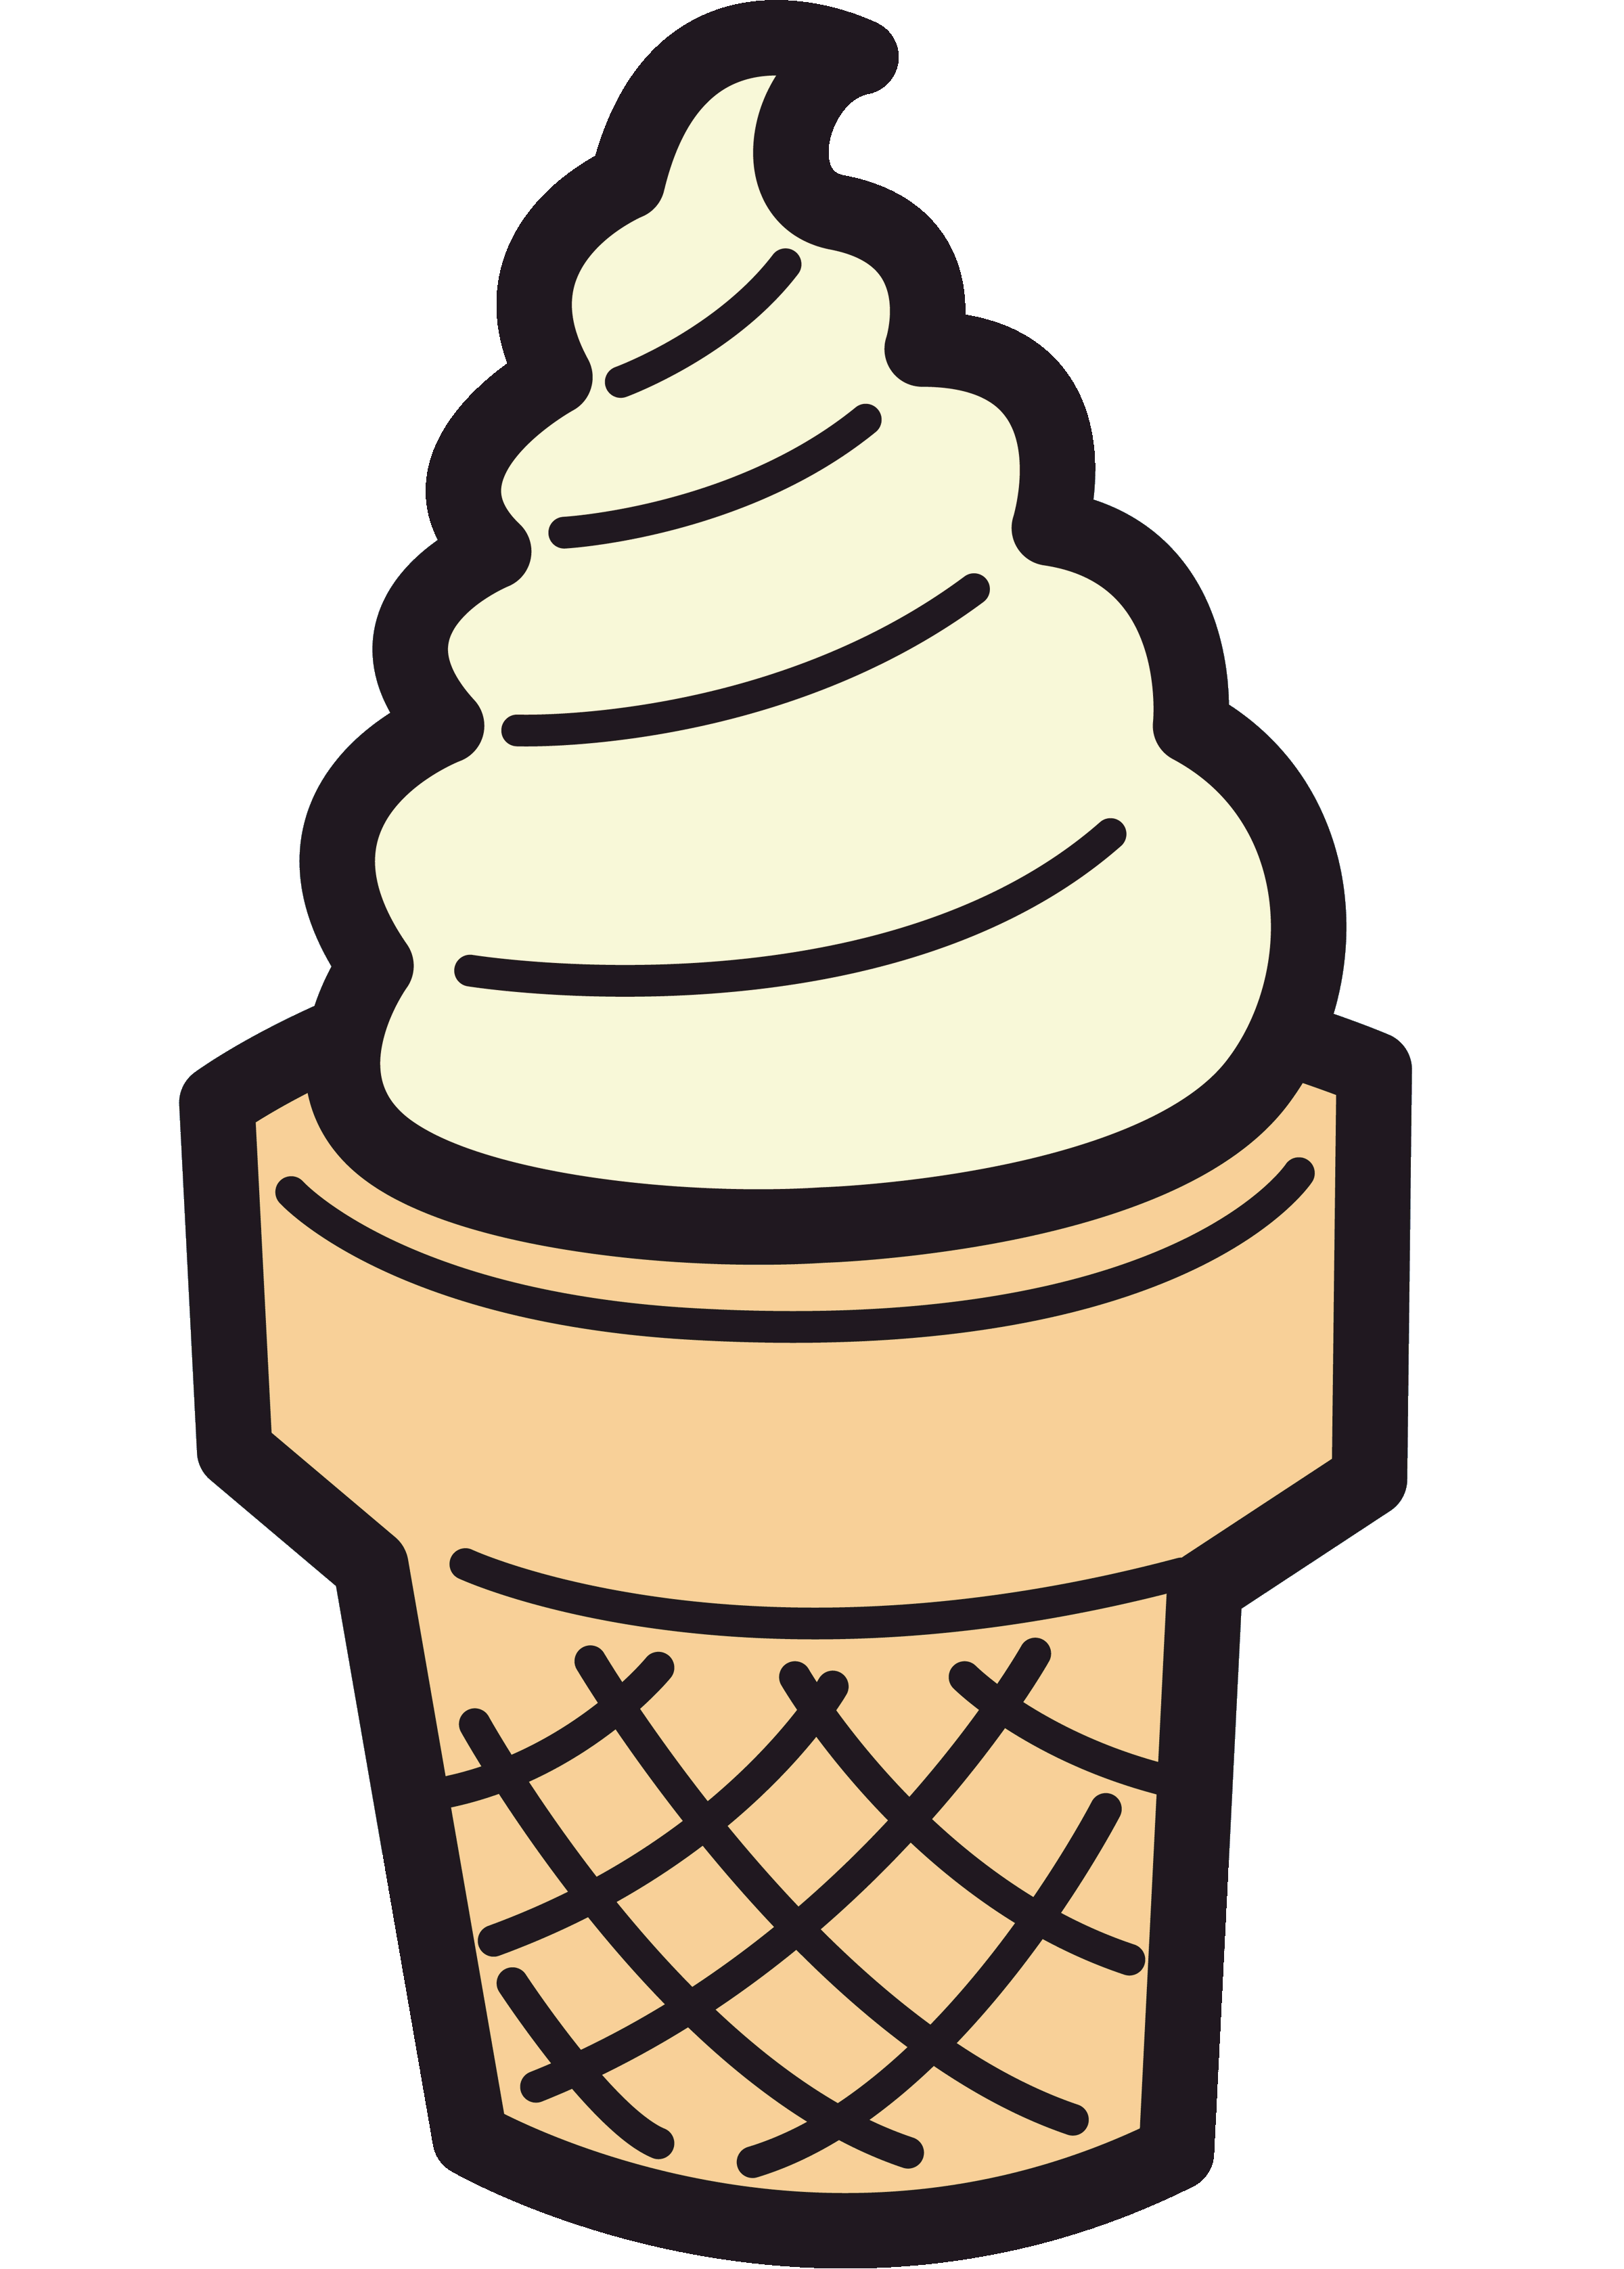 Ice cream cone ice creamne clipart free clipart images 4